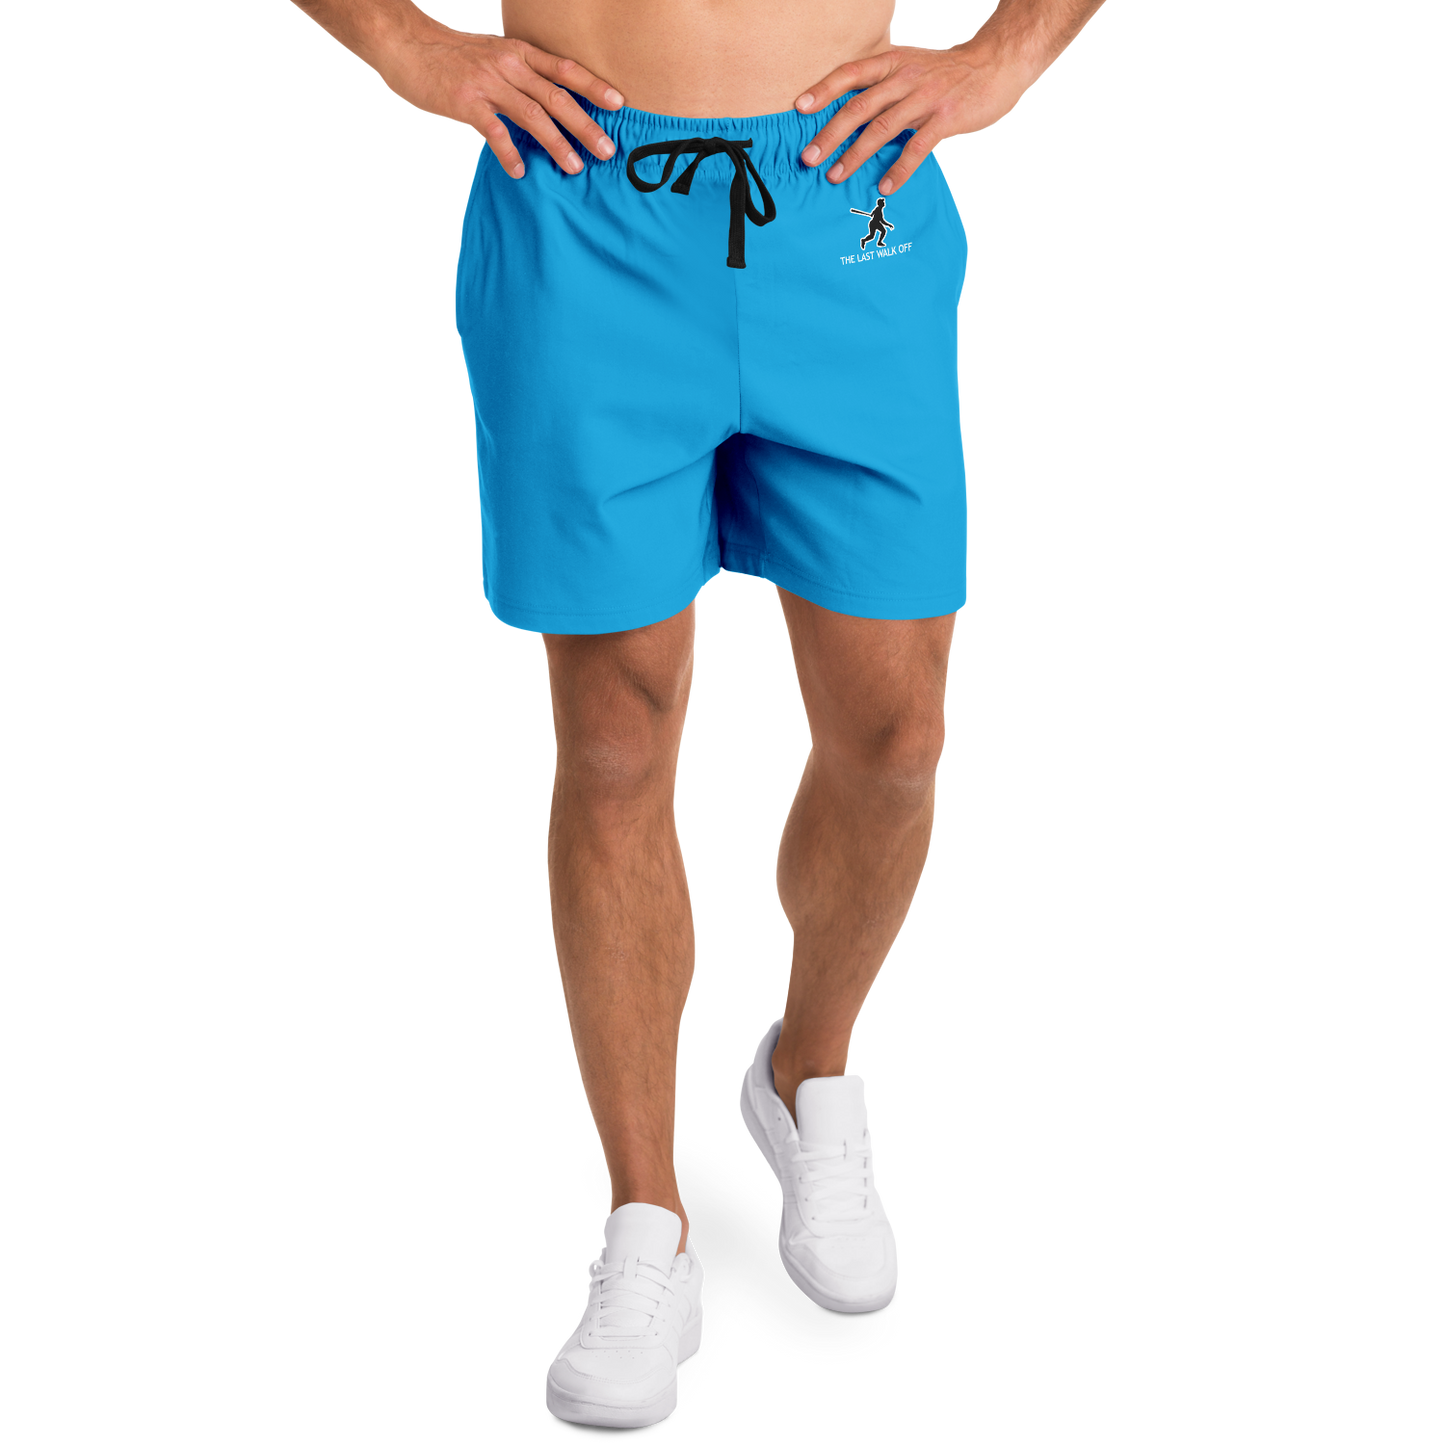 Miami Men's Blue Shorts